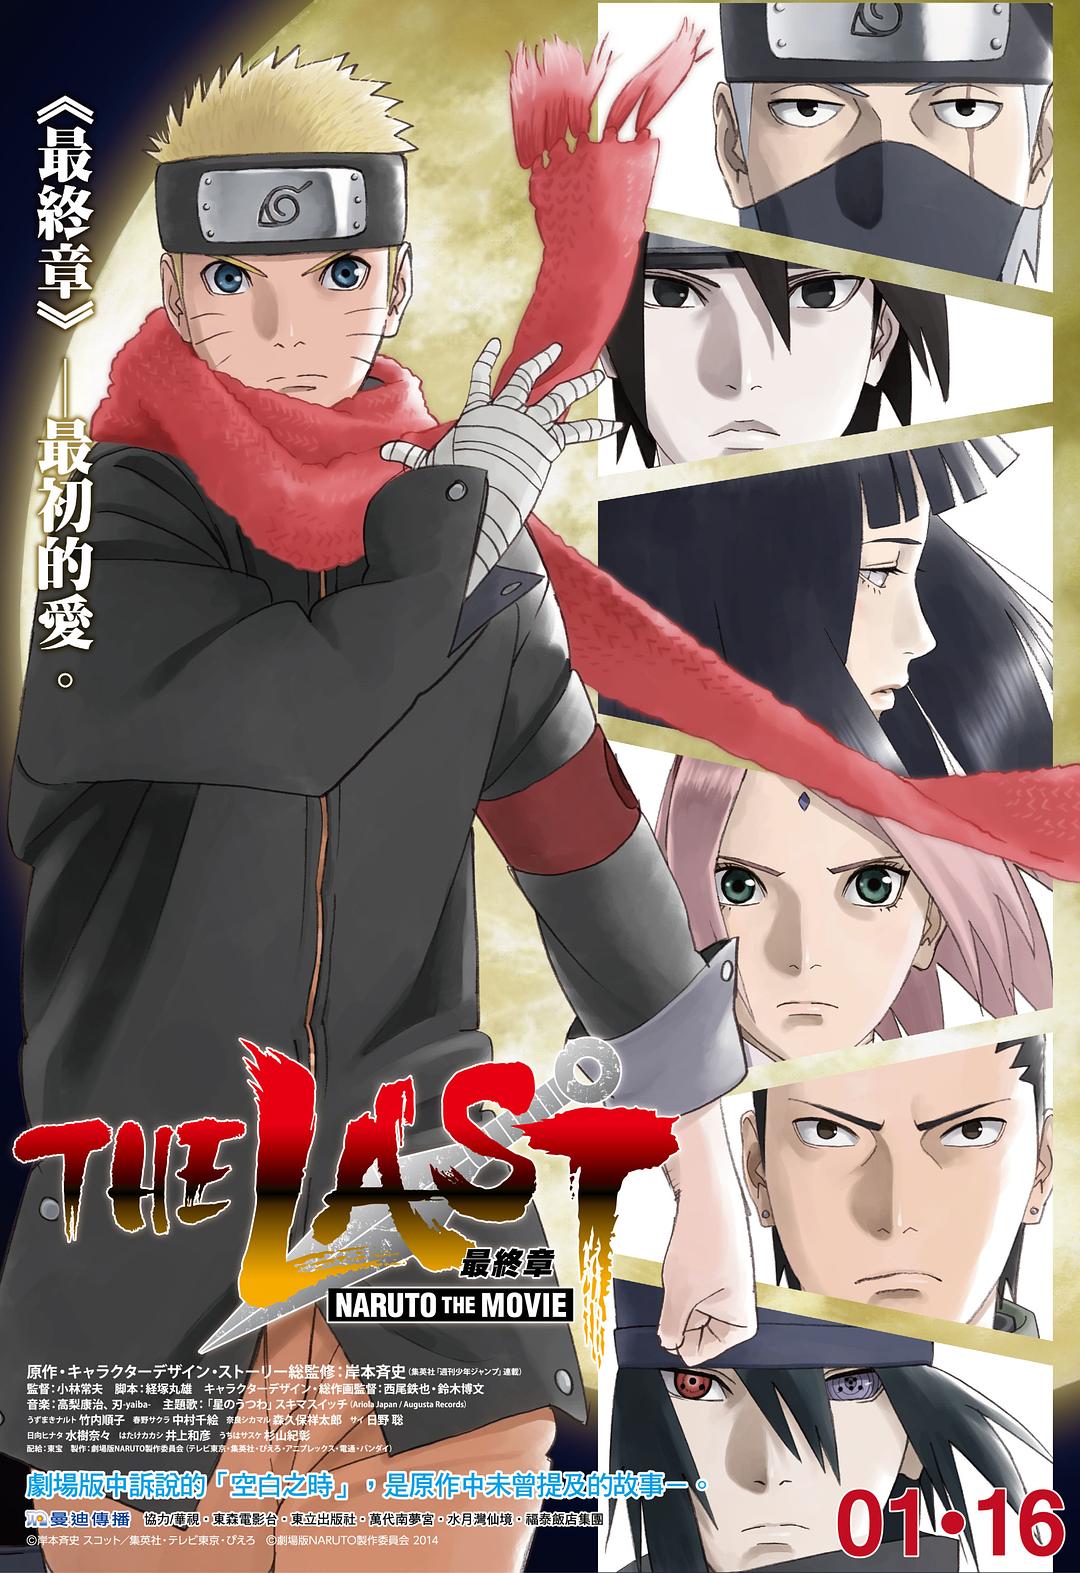 火影忍者戏院版:终章 The.Last.Naruto.The.Movie.2014.JAPANESE.1080p.BluRay.x264.DTS-WiKi 10.58GB-1.jpg